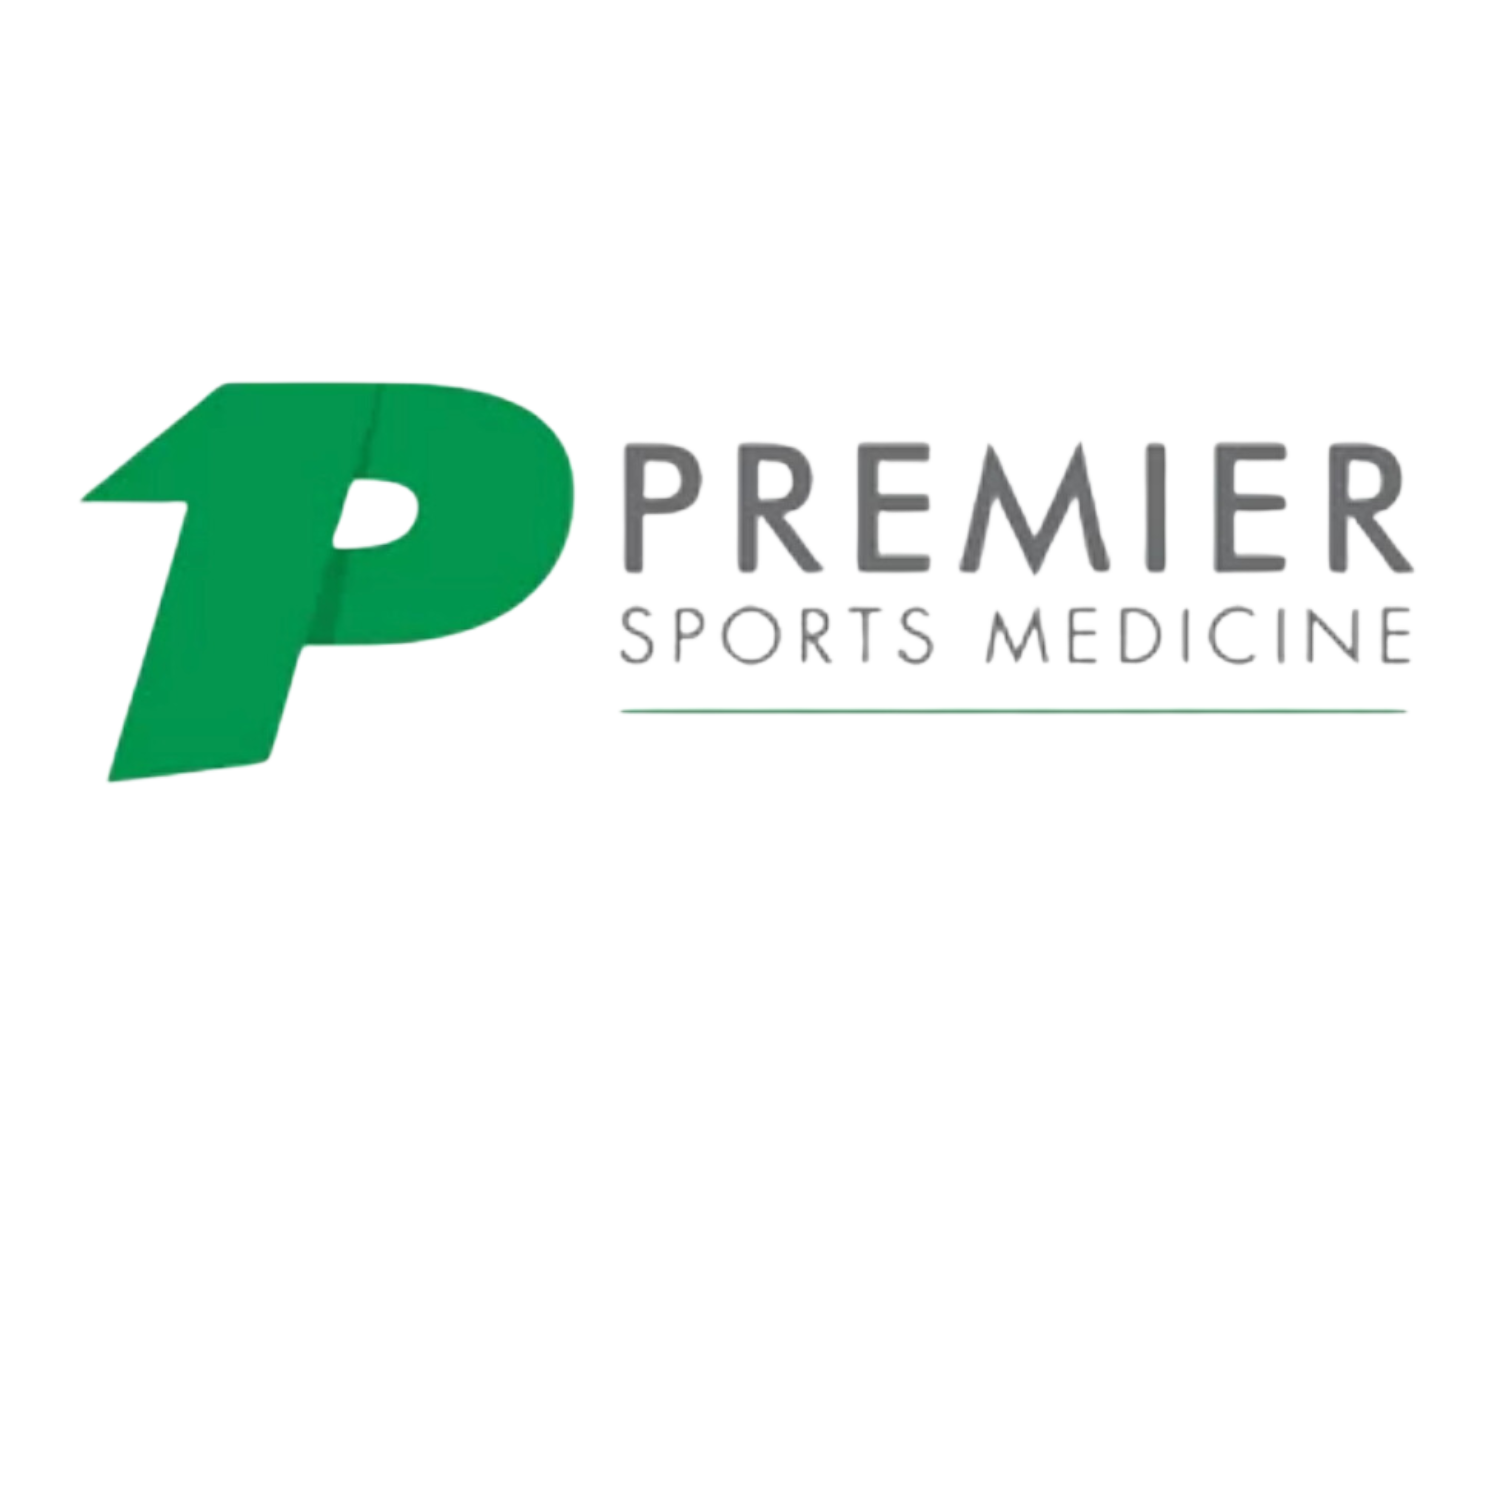 Premier Sports Medicine